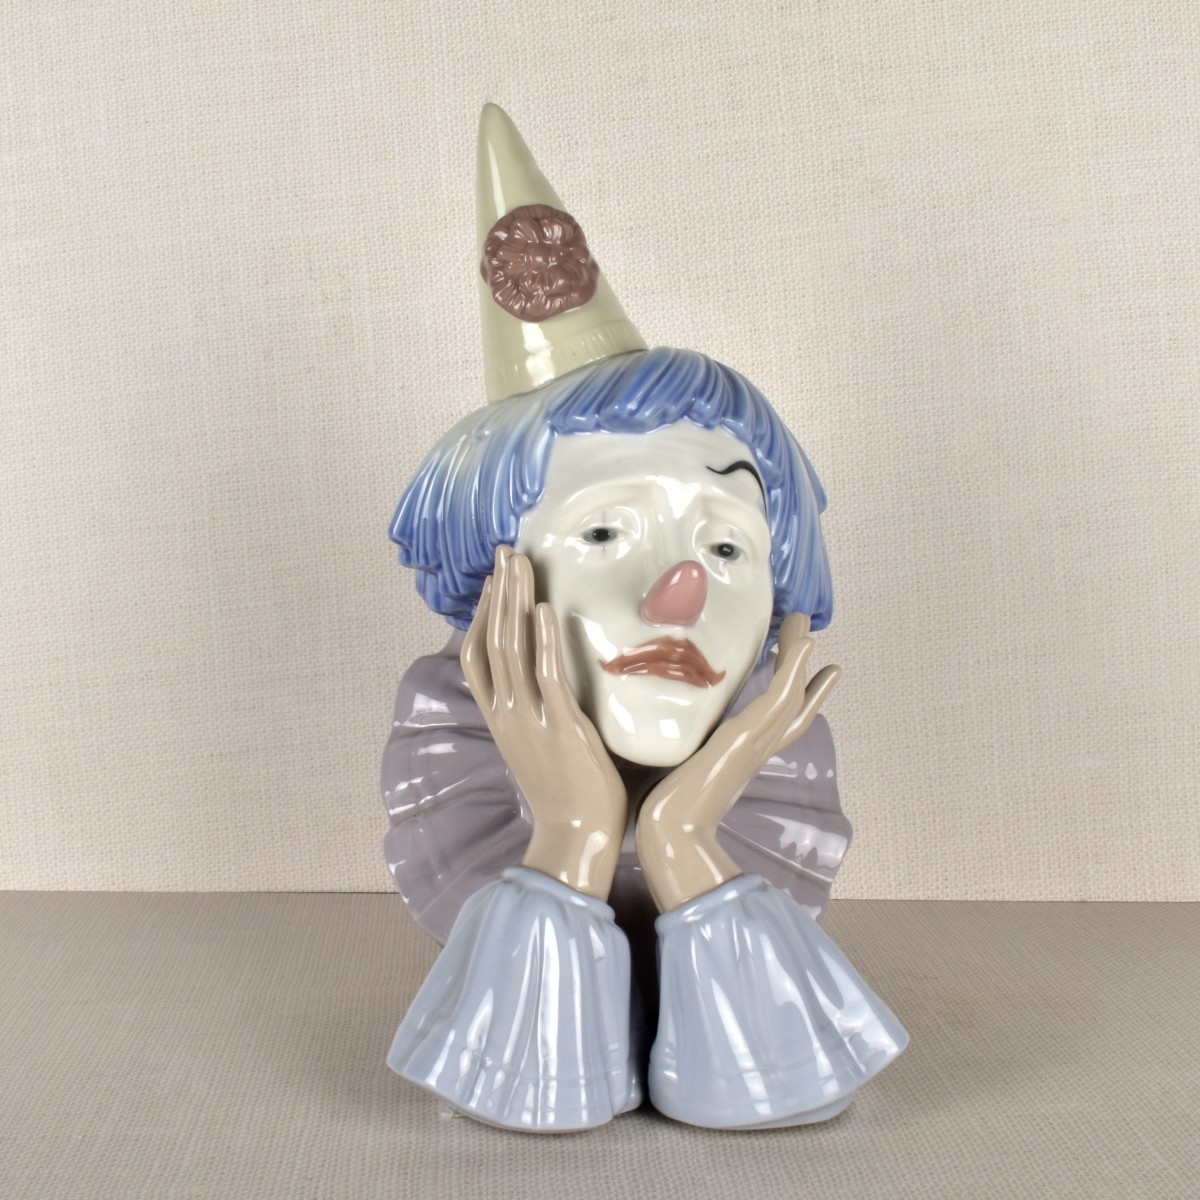 Lladro Figurine of a Sad Clown